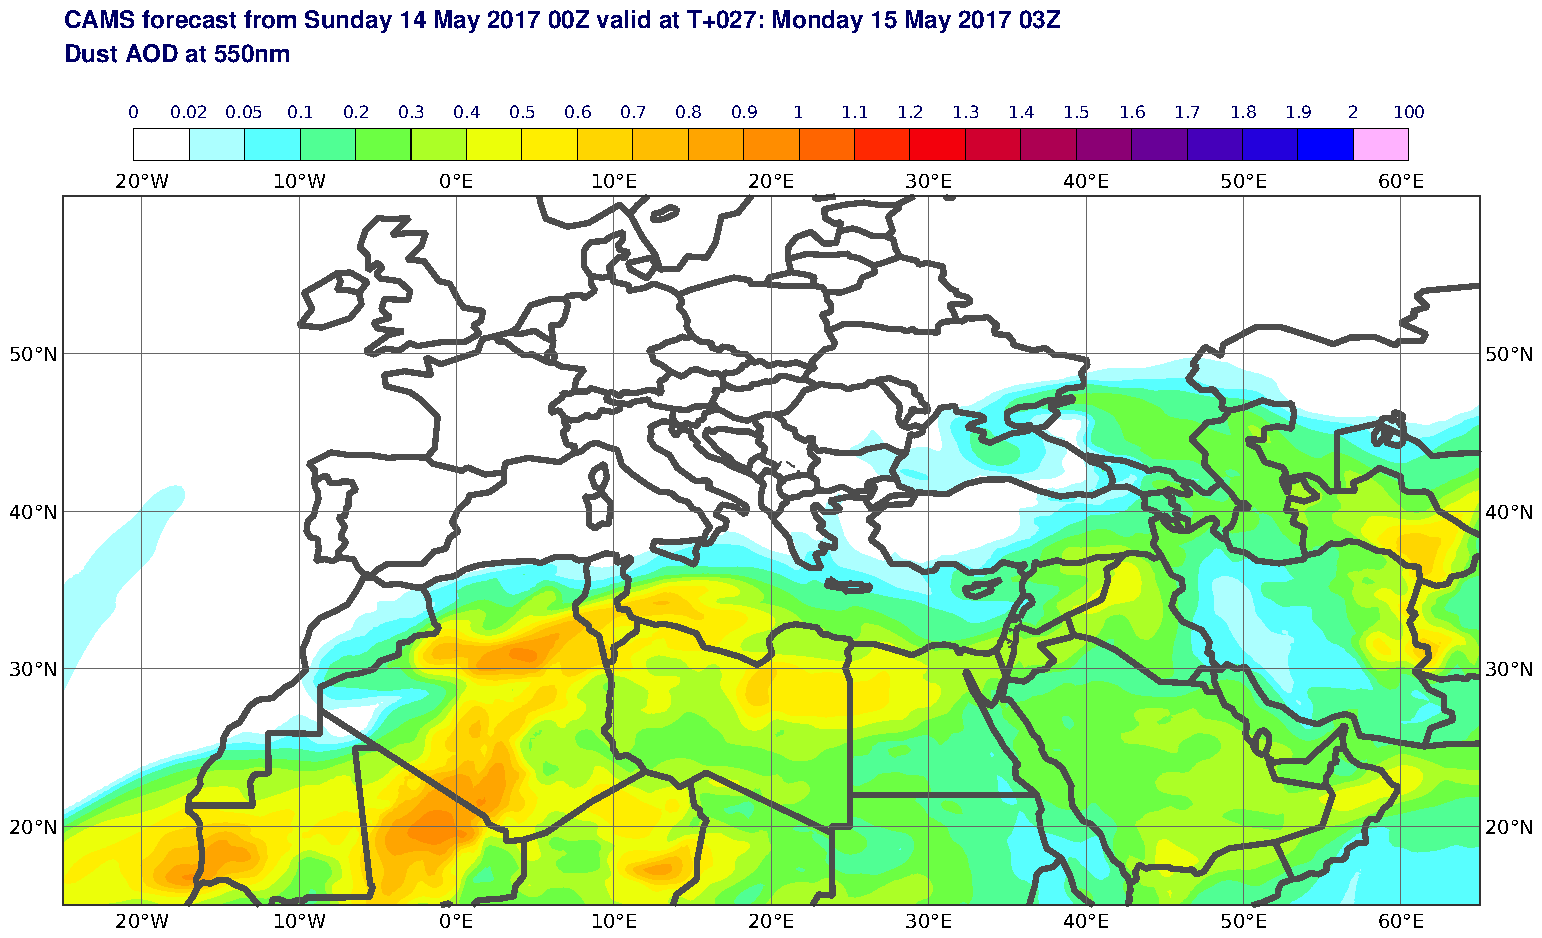 Dust AOD at 550nm valid at T27 - 2017-05-15 03:00